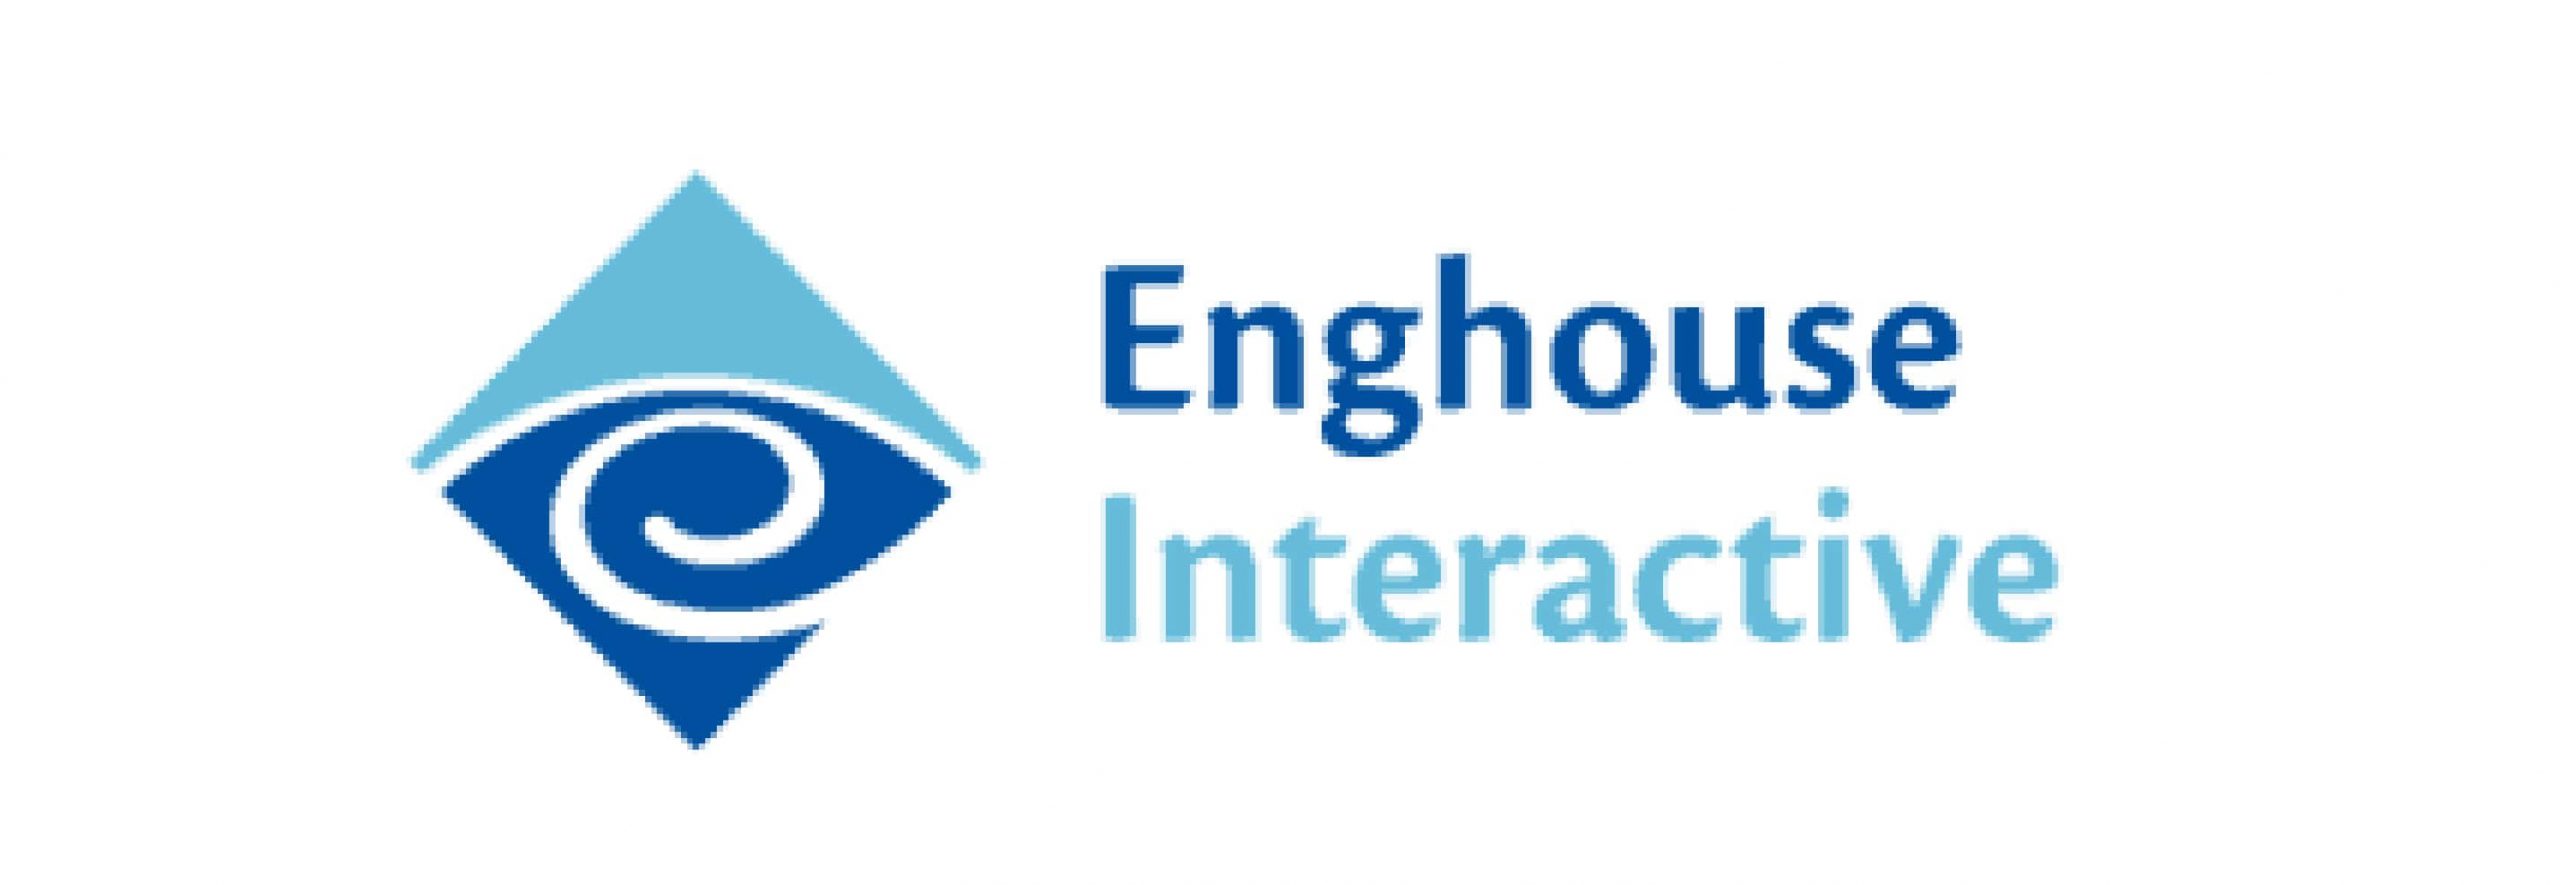 enghouse interactive-01-min